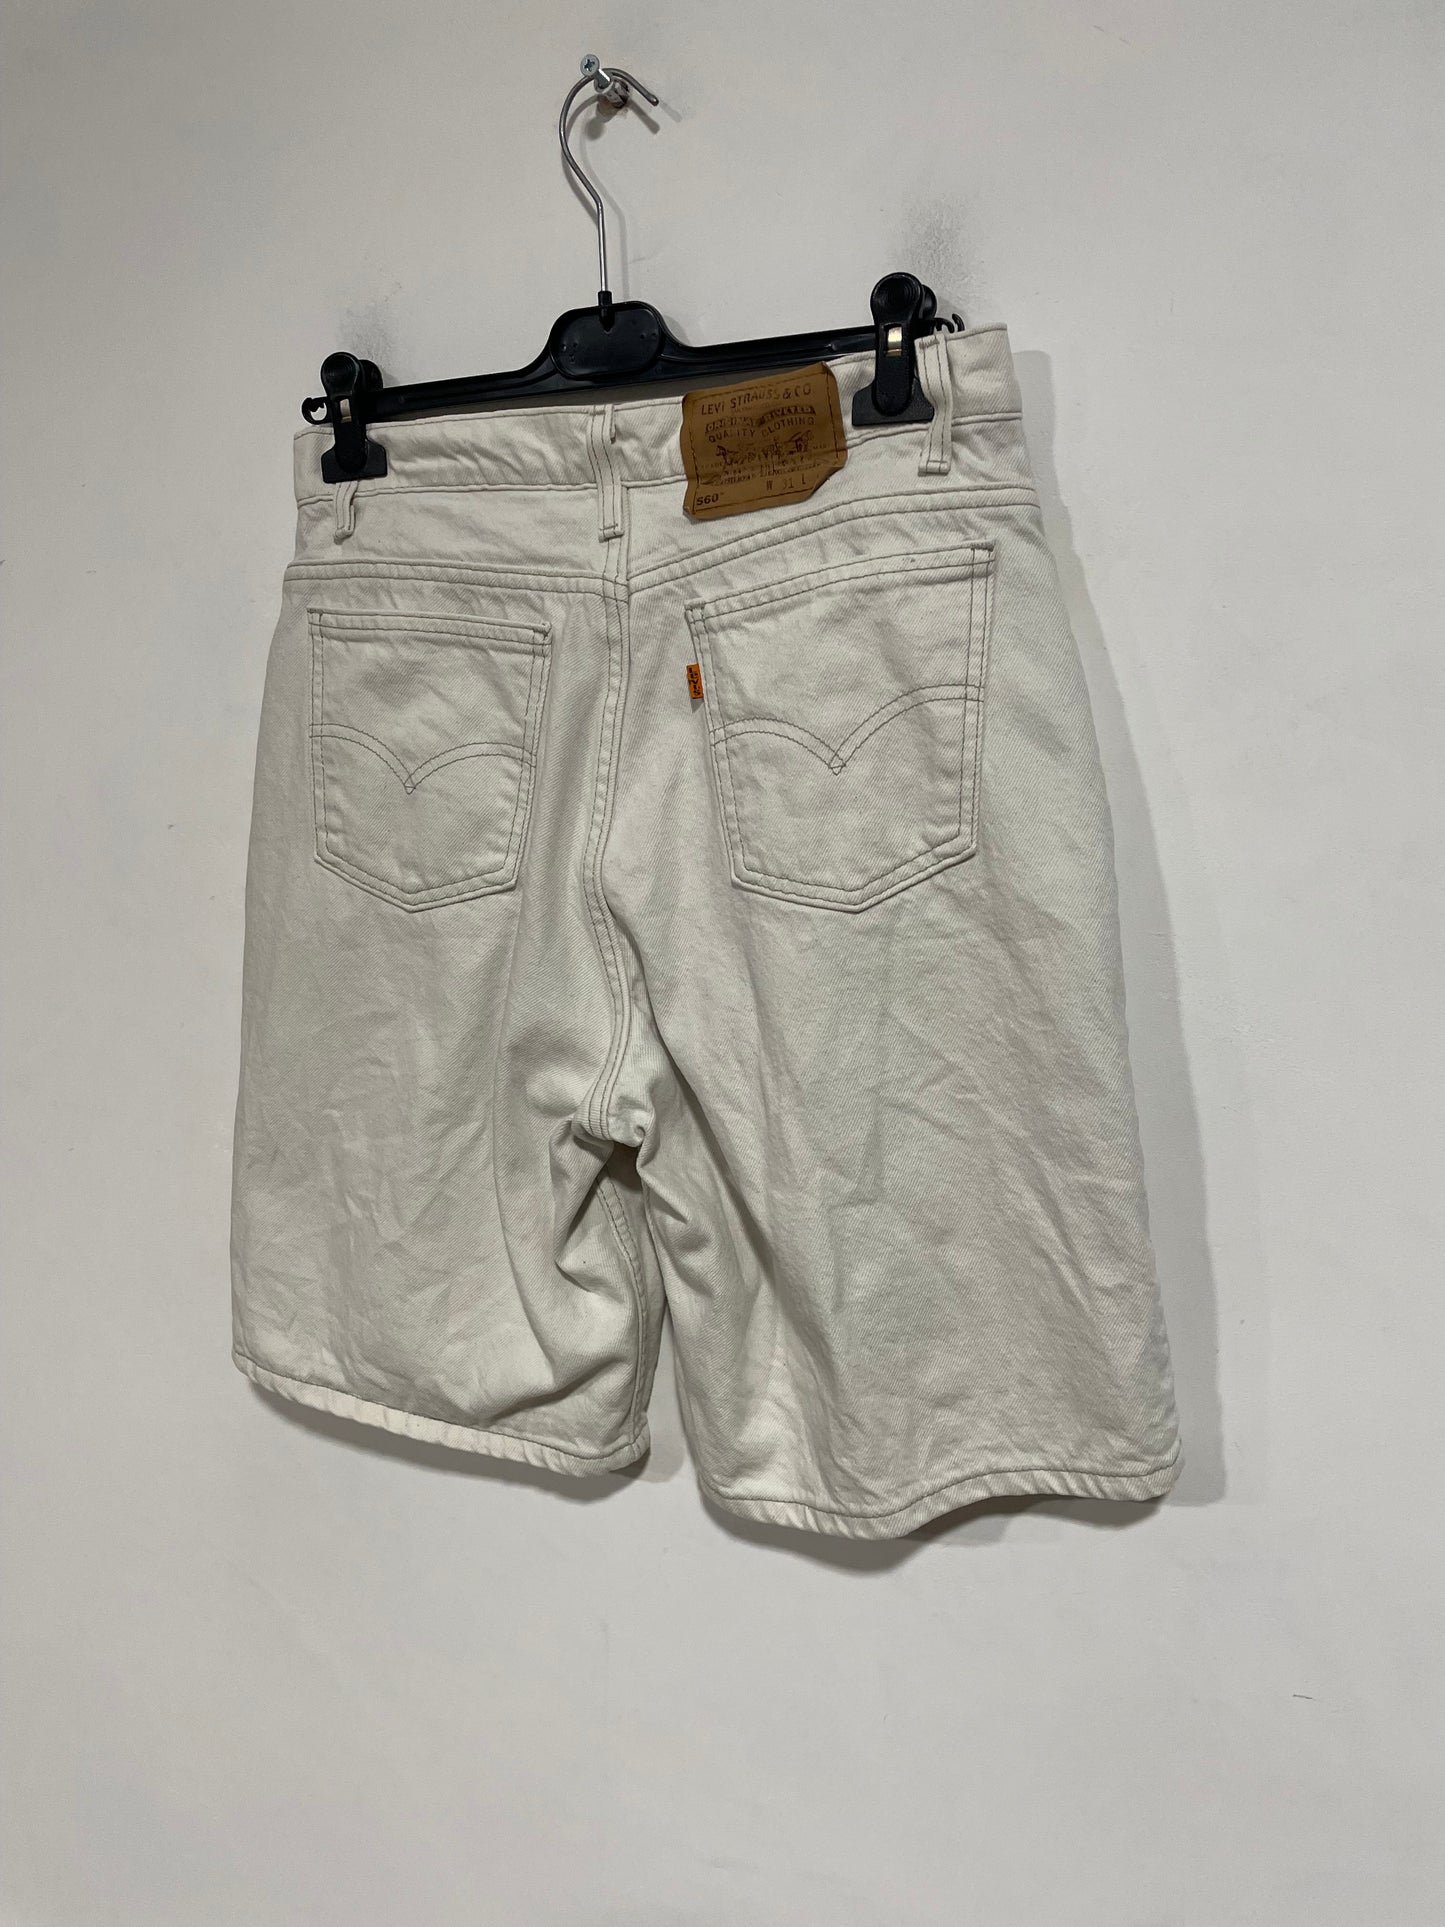 Bermuda shorts Levi’s 560 in jeans (D807)